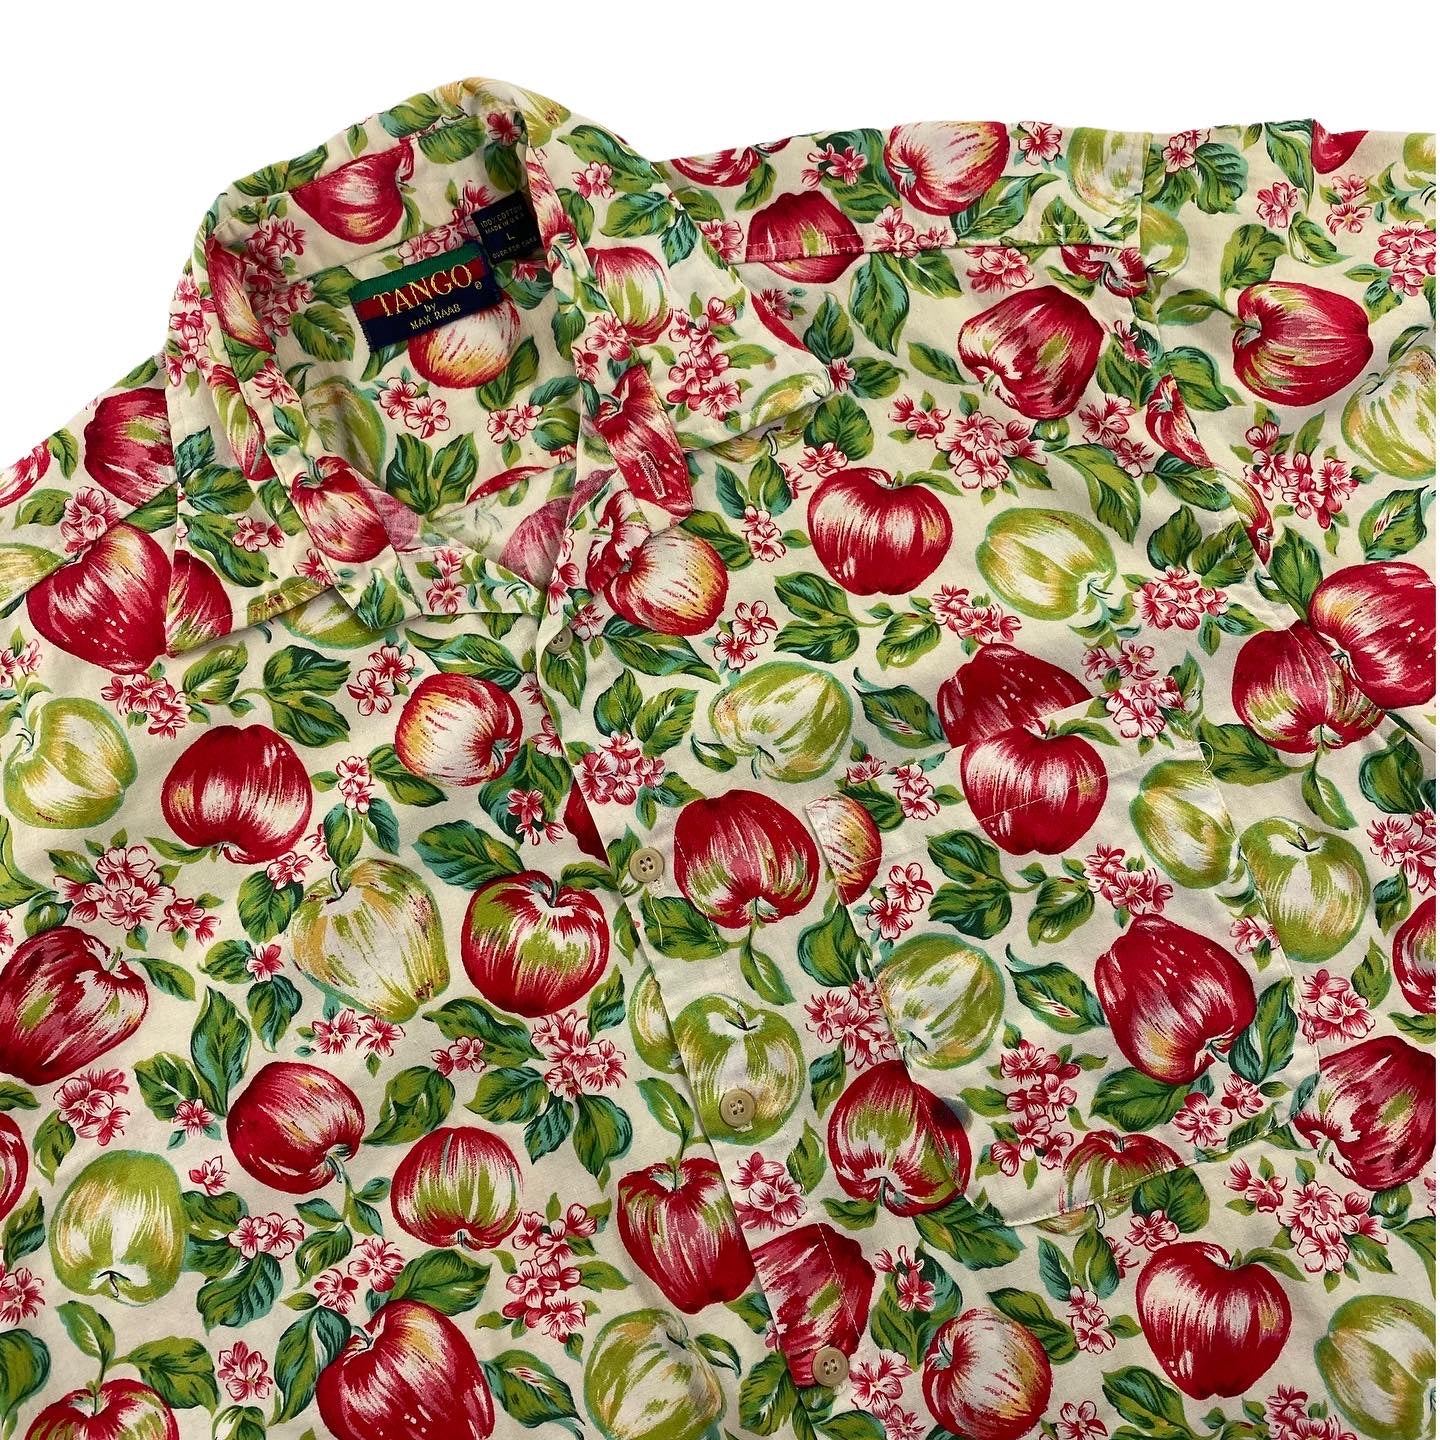 90s Apples camp shirt. L/XL